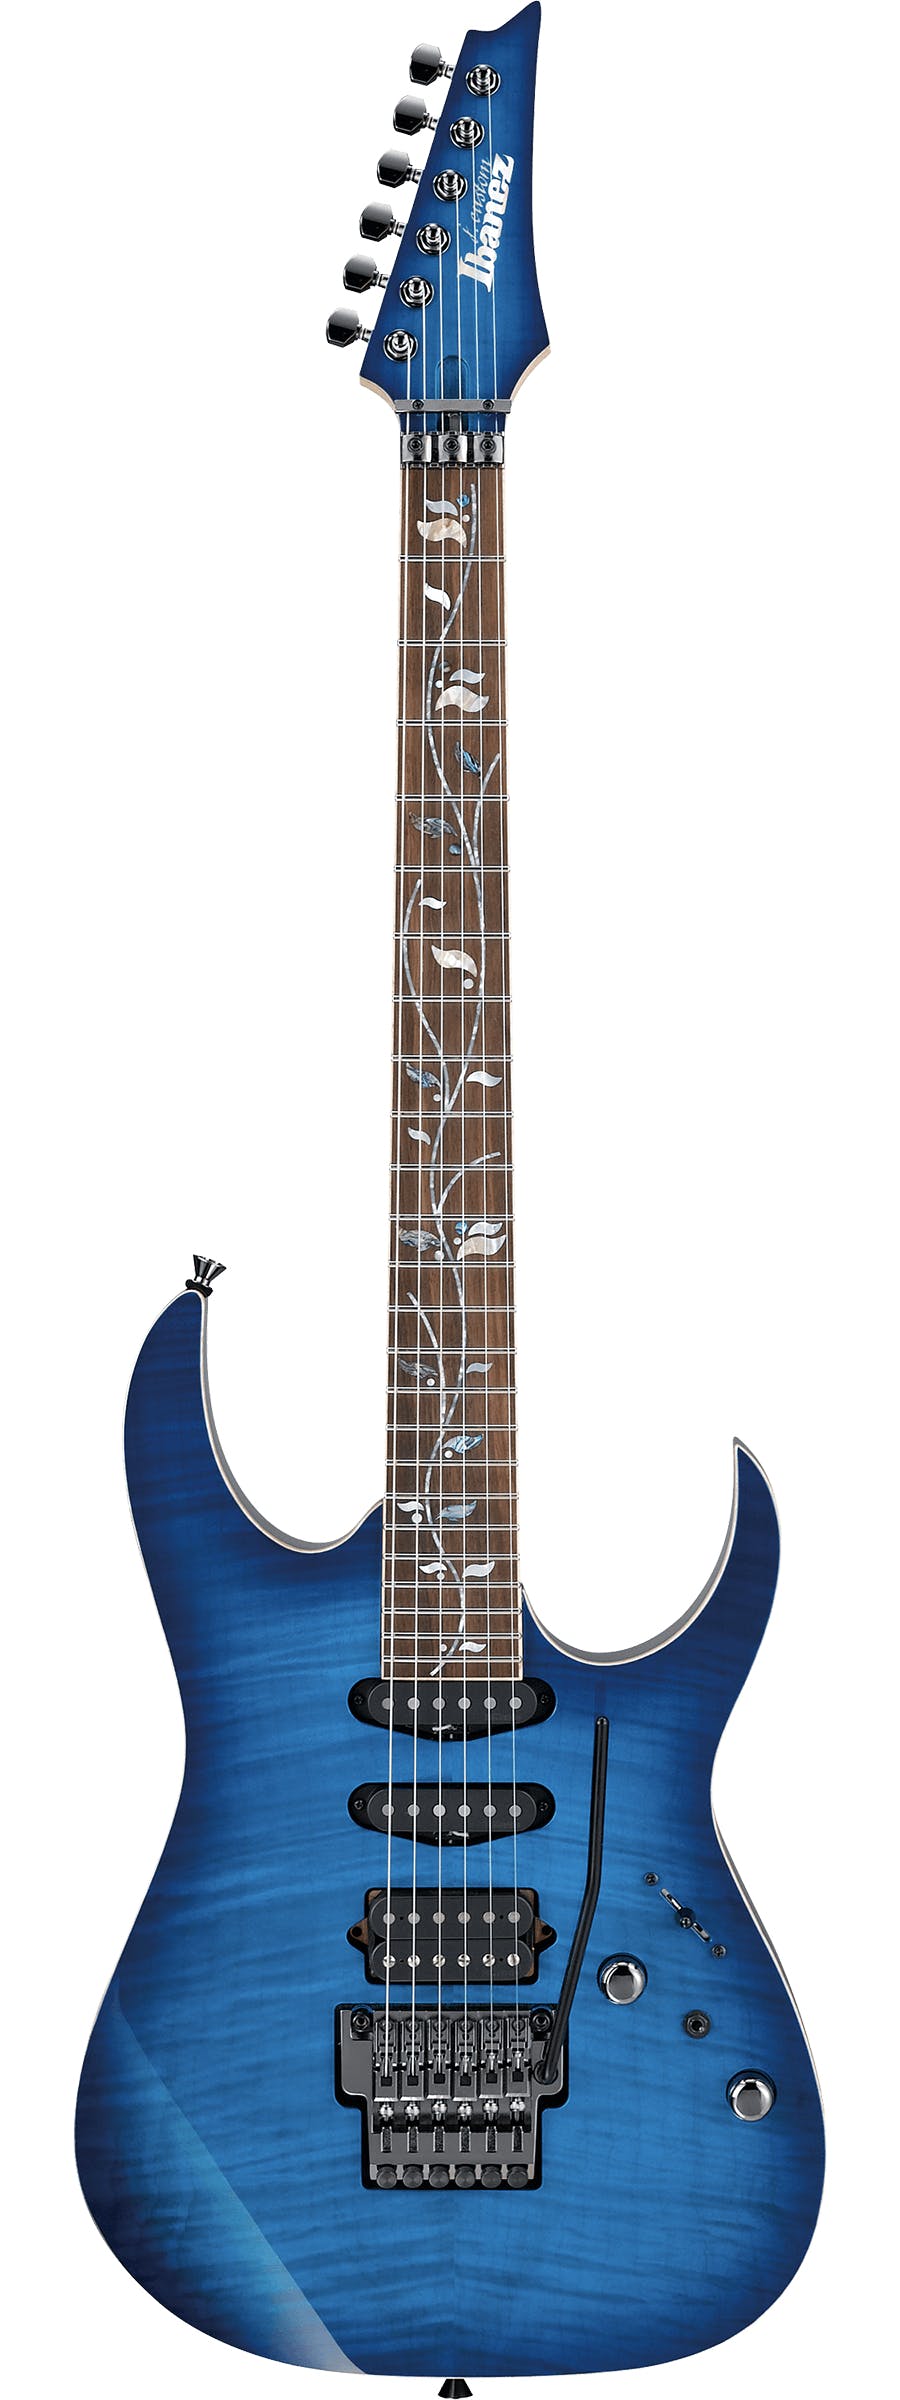 Ibanez Limited Edition RG8560-SPB j.custom Electric Guitar in 